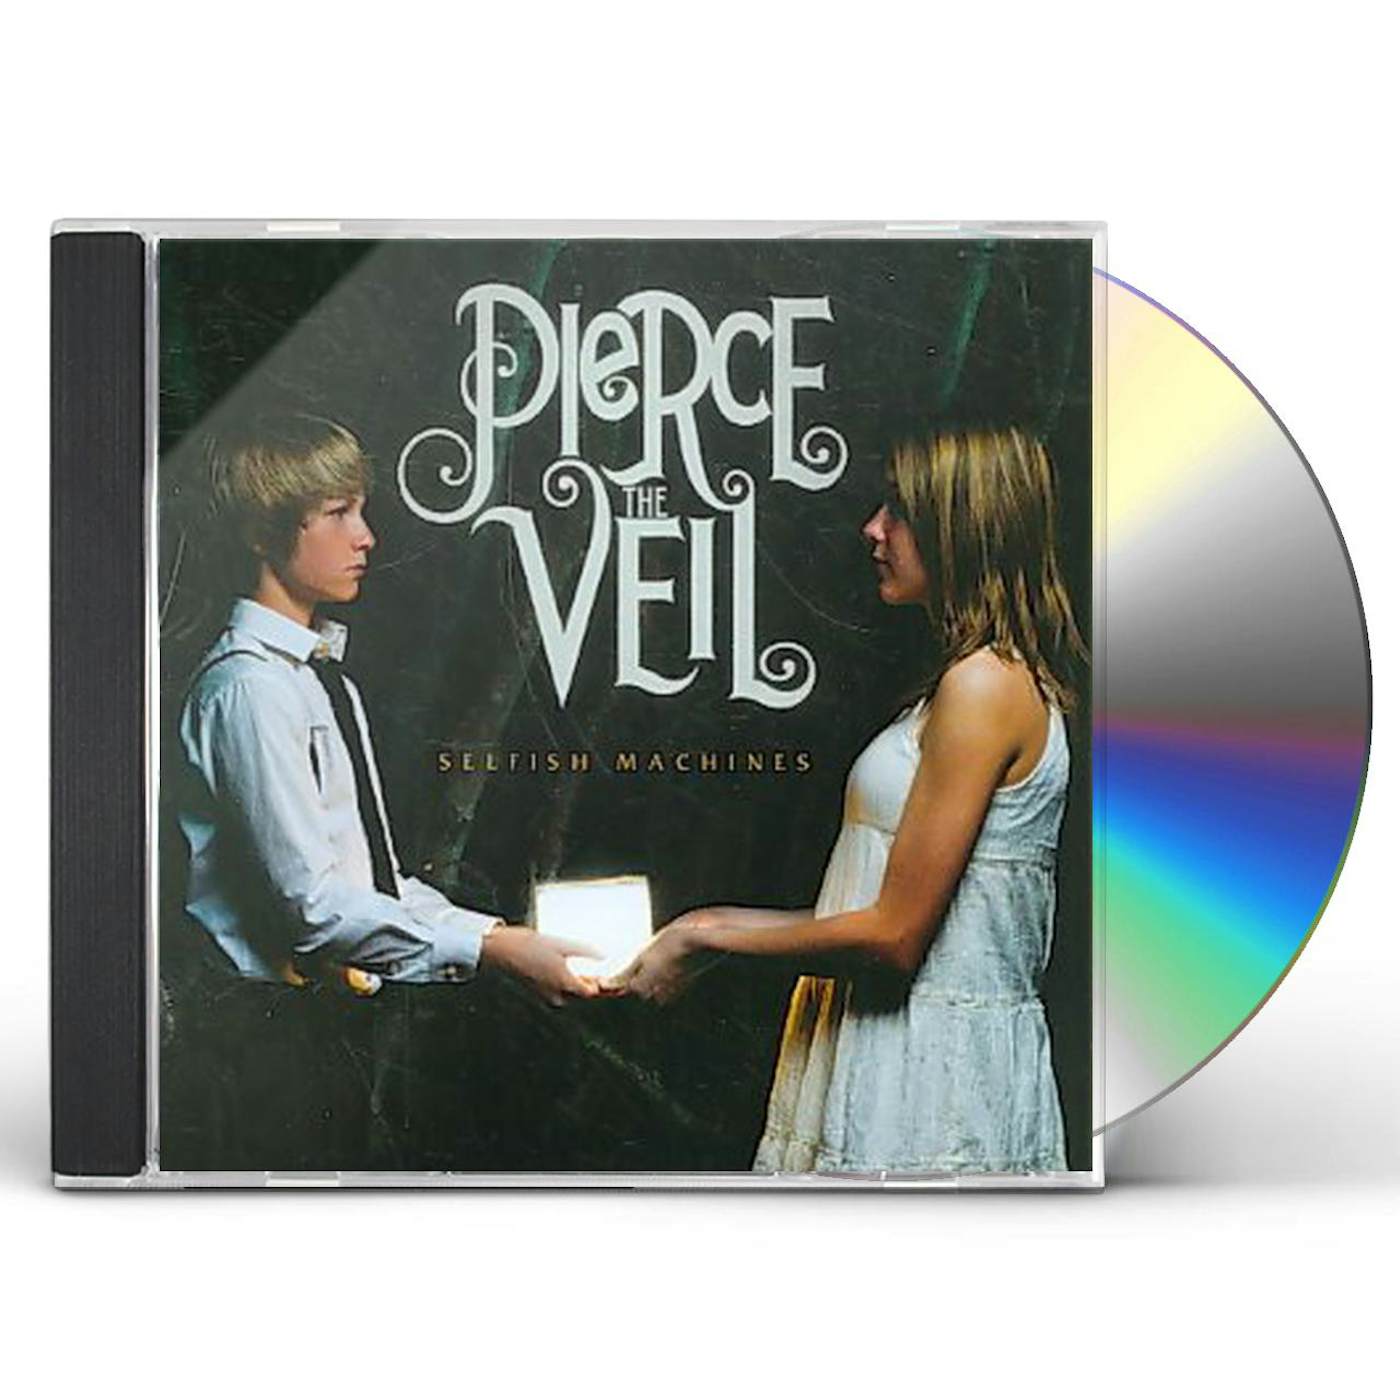 Pierce The Veil SELFISH MACHINES CD